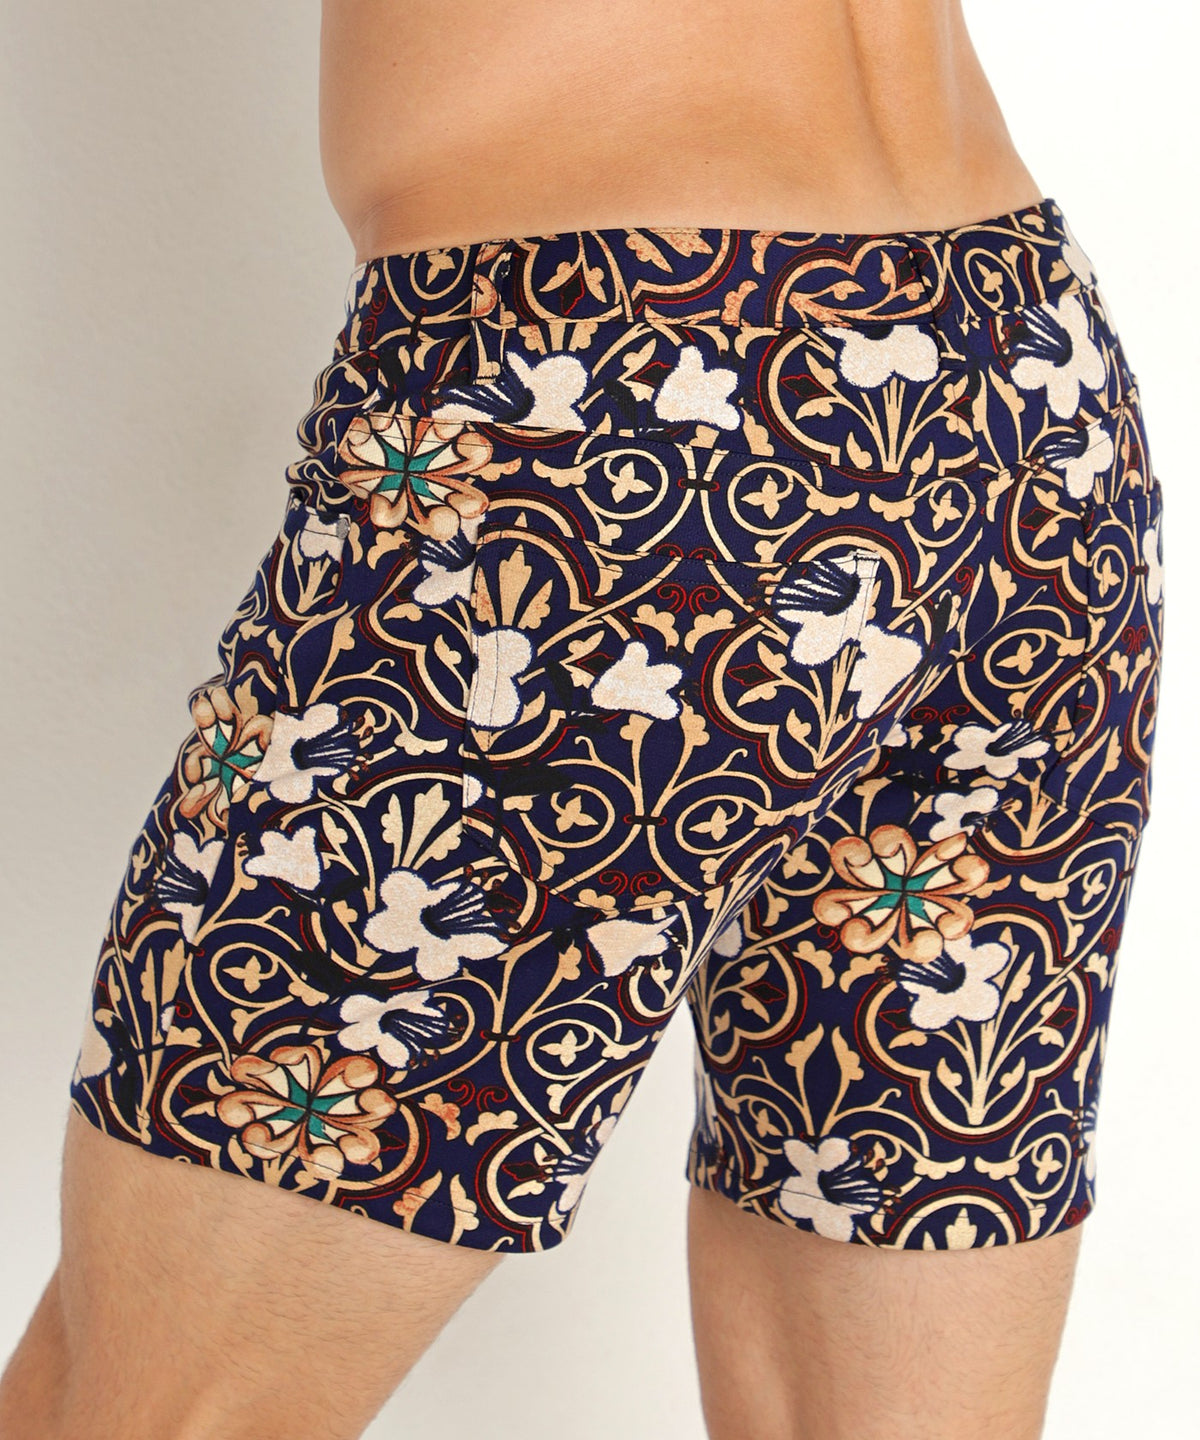 5" Jacquard Knit Stretch Shorts (Khaki Navy Mosaic Floral)